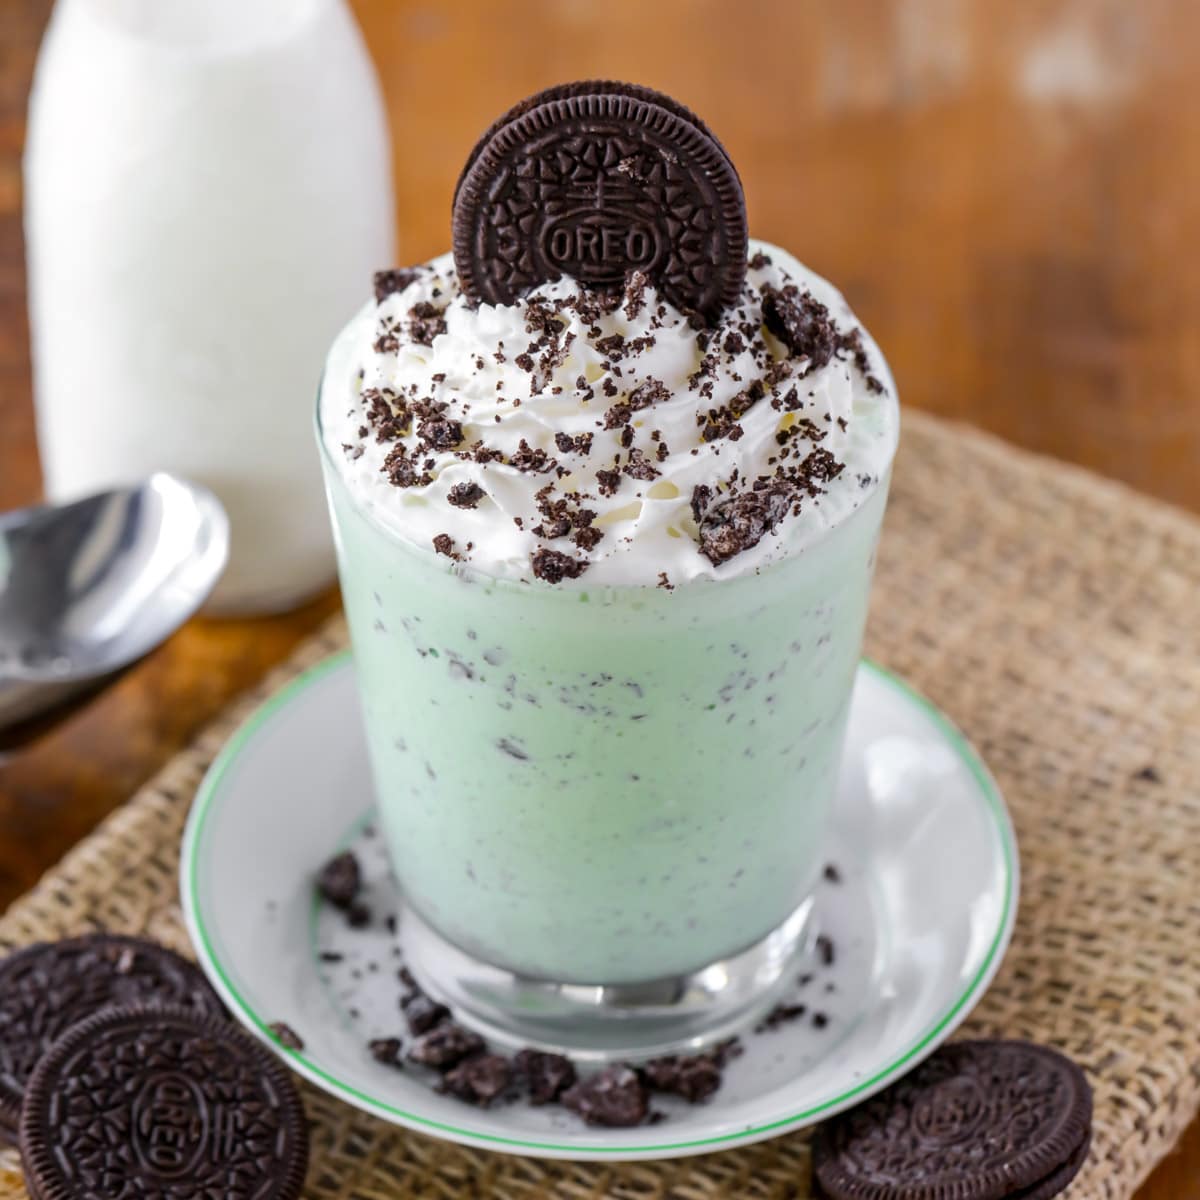 Mint Oreo ice cream shake served with whipped cream and Oreo